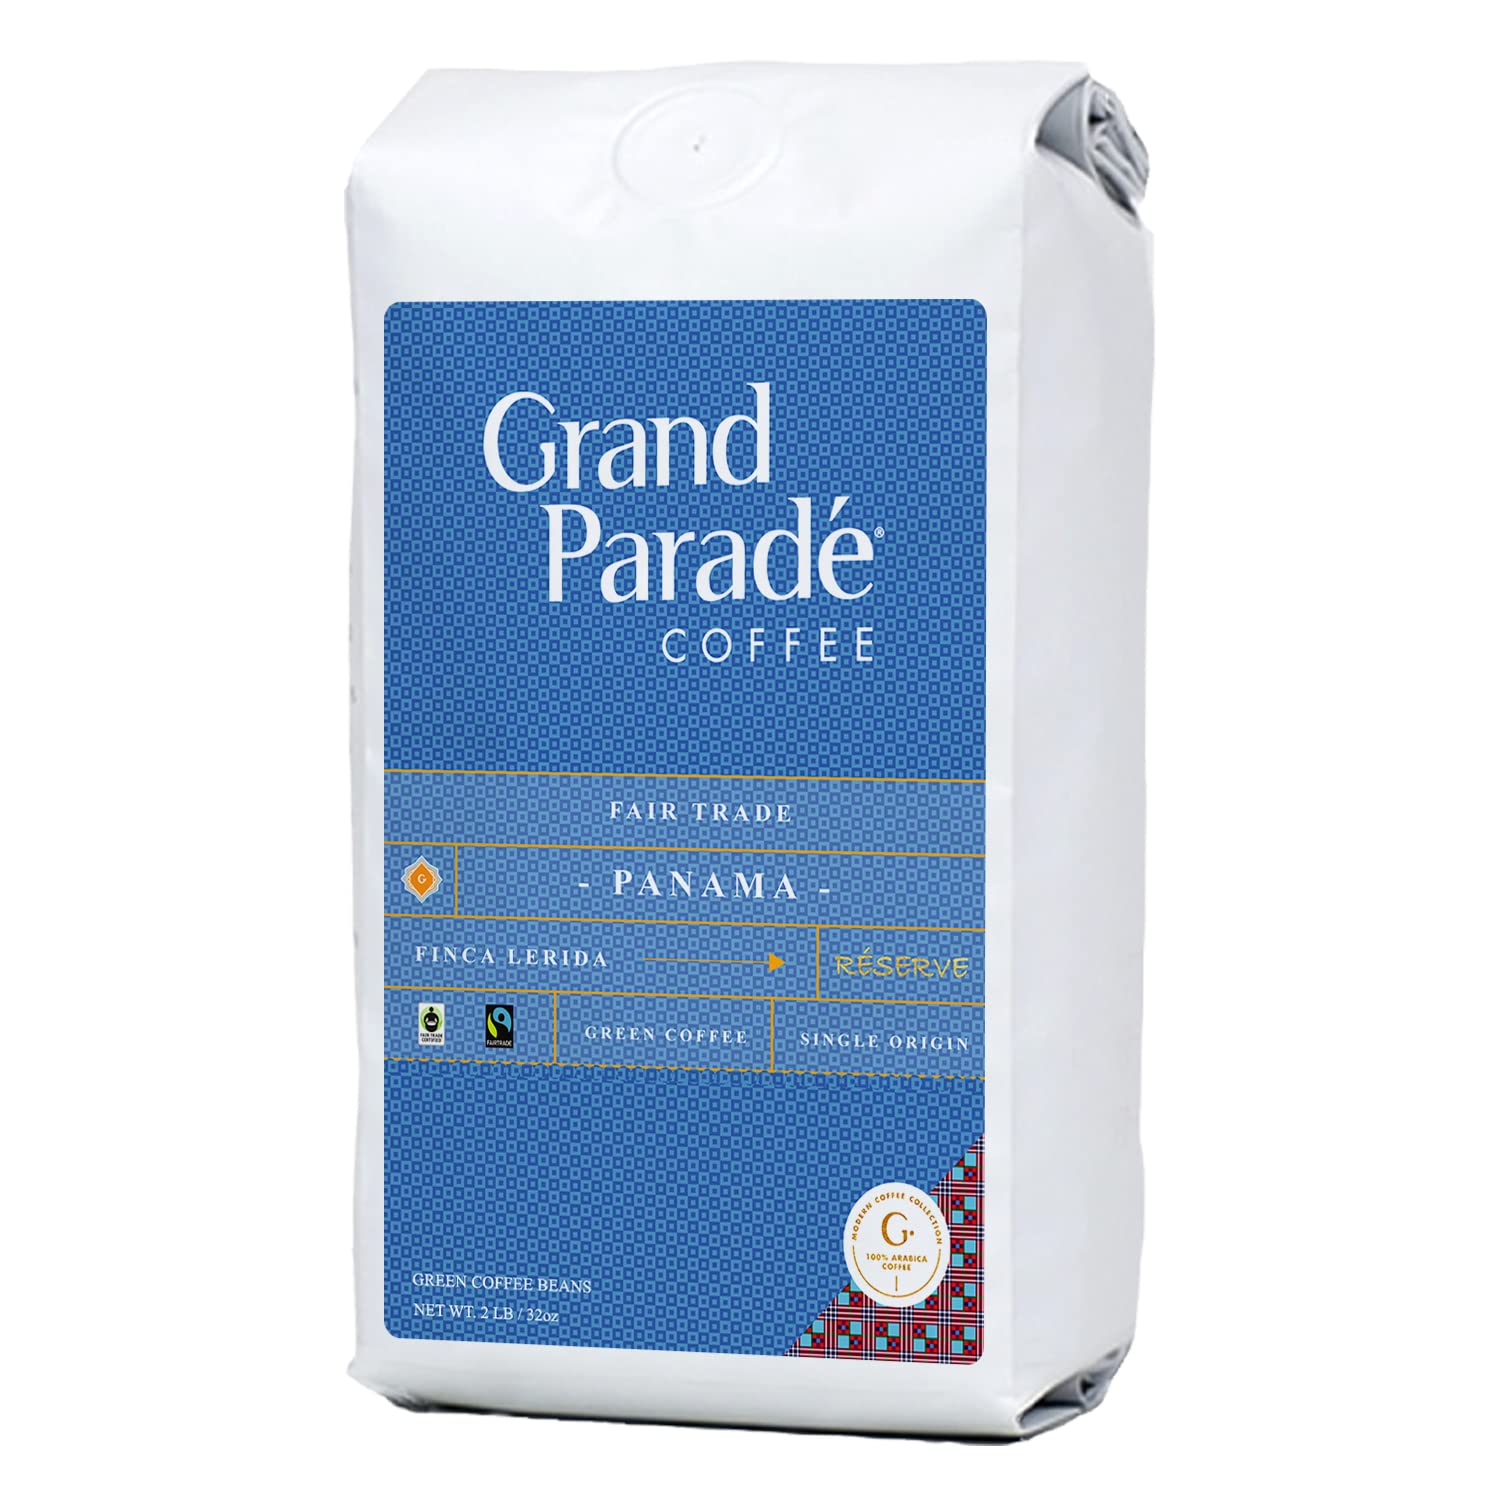 Grand Parade Coffee,Unroasted Green Coffee Beans - Panama Boquete Award Winner - Lerida Single Origin